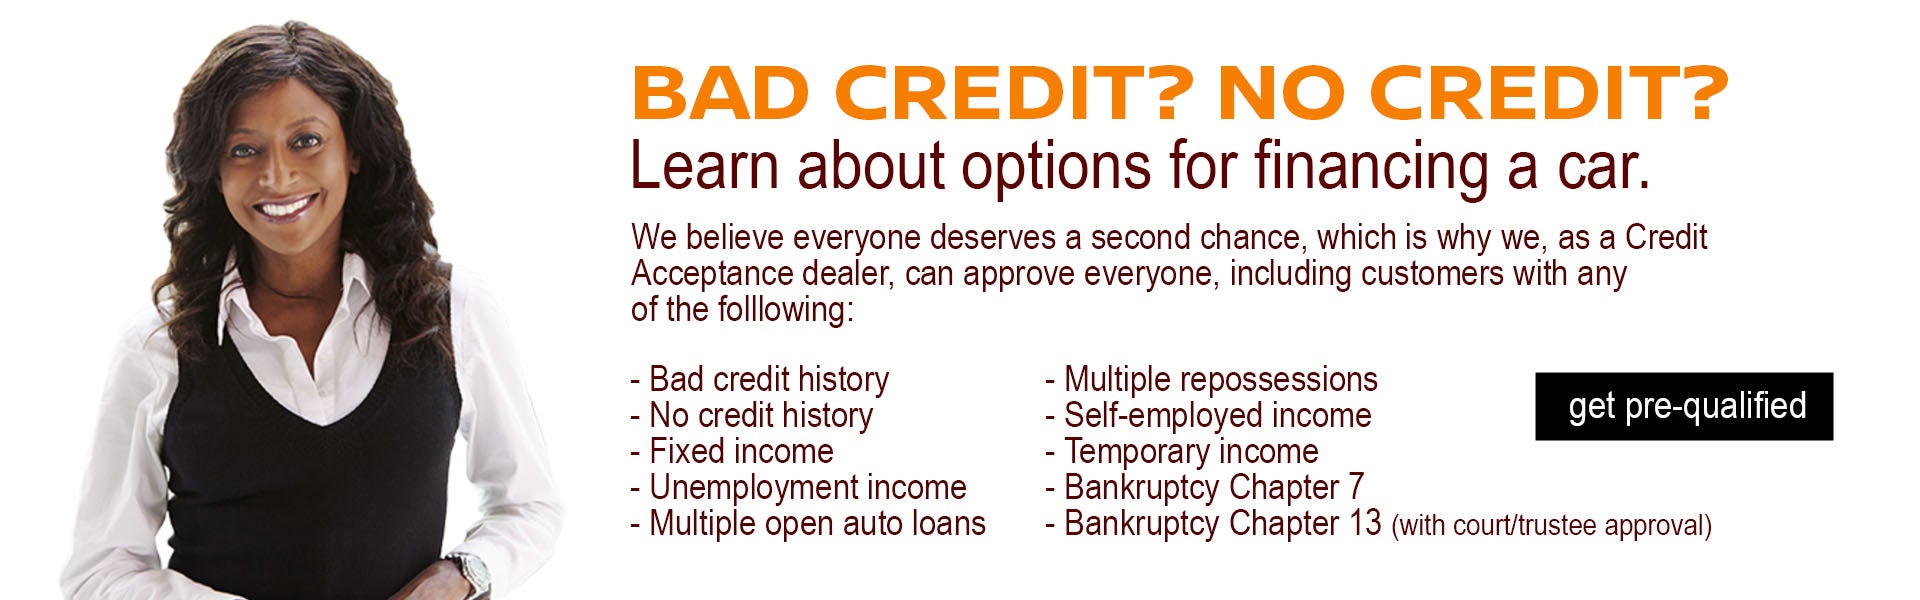 Bad Credit? No Credit?